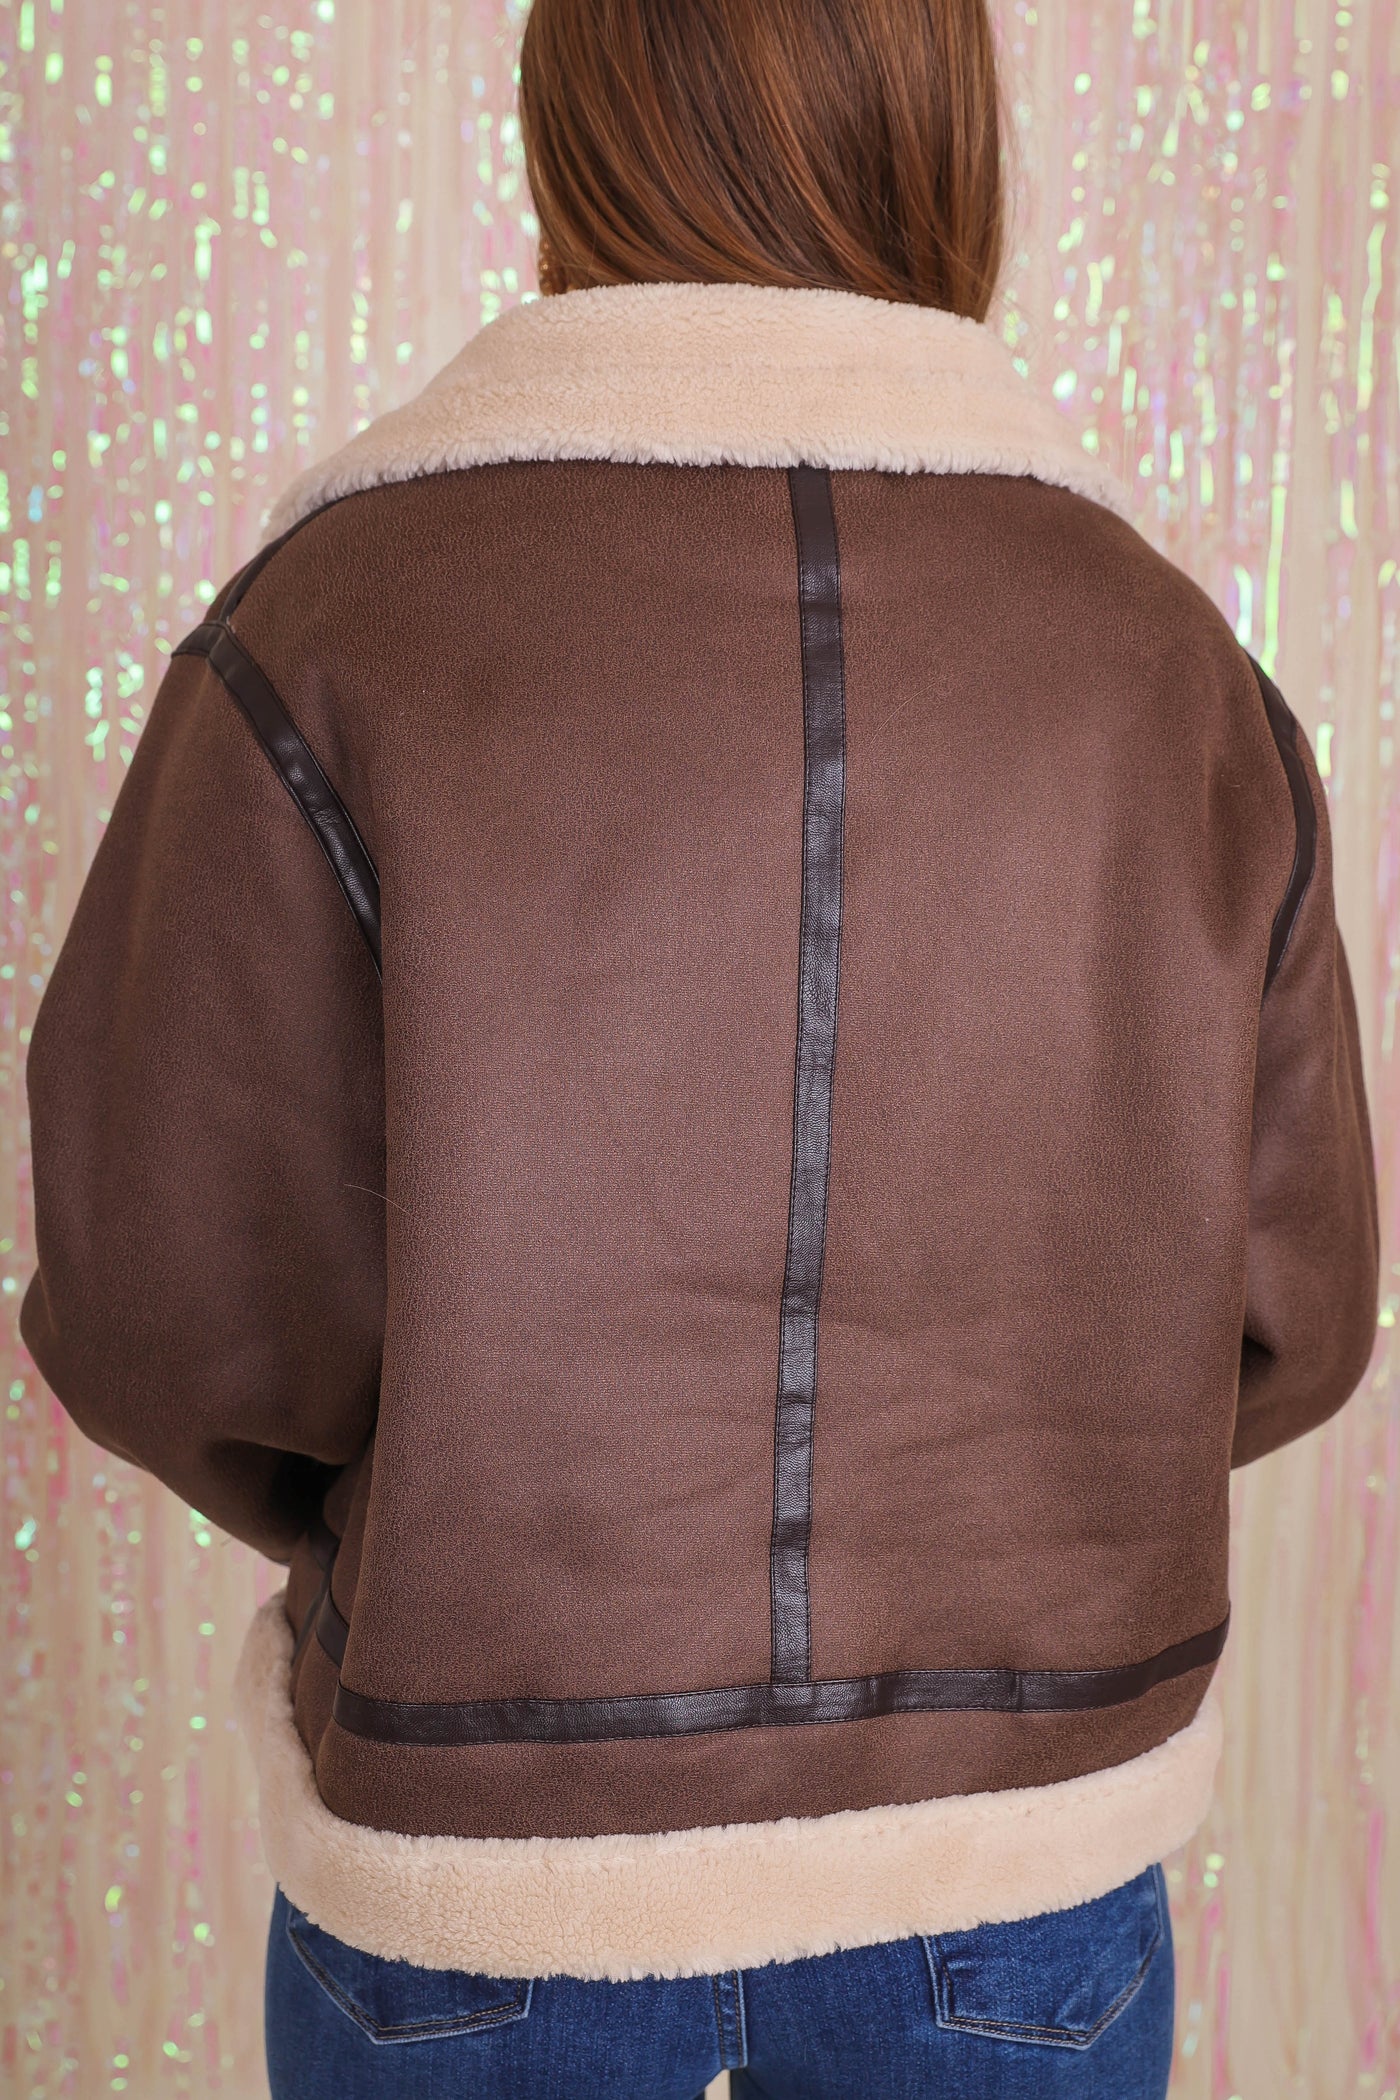 Sherpa Lined Faux Leather Jacket- Women's Brown Faux Leather Jacket- Women's Chic Winter Coat